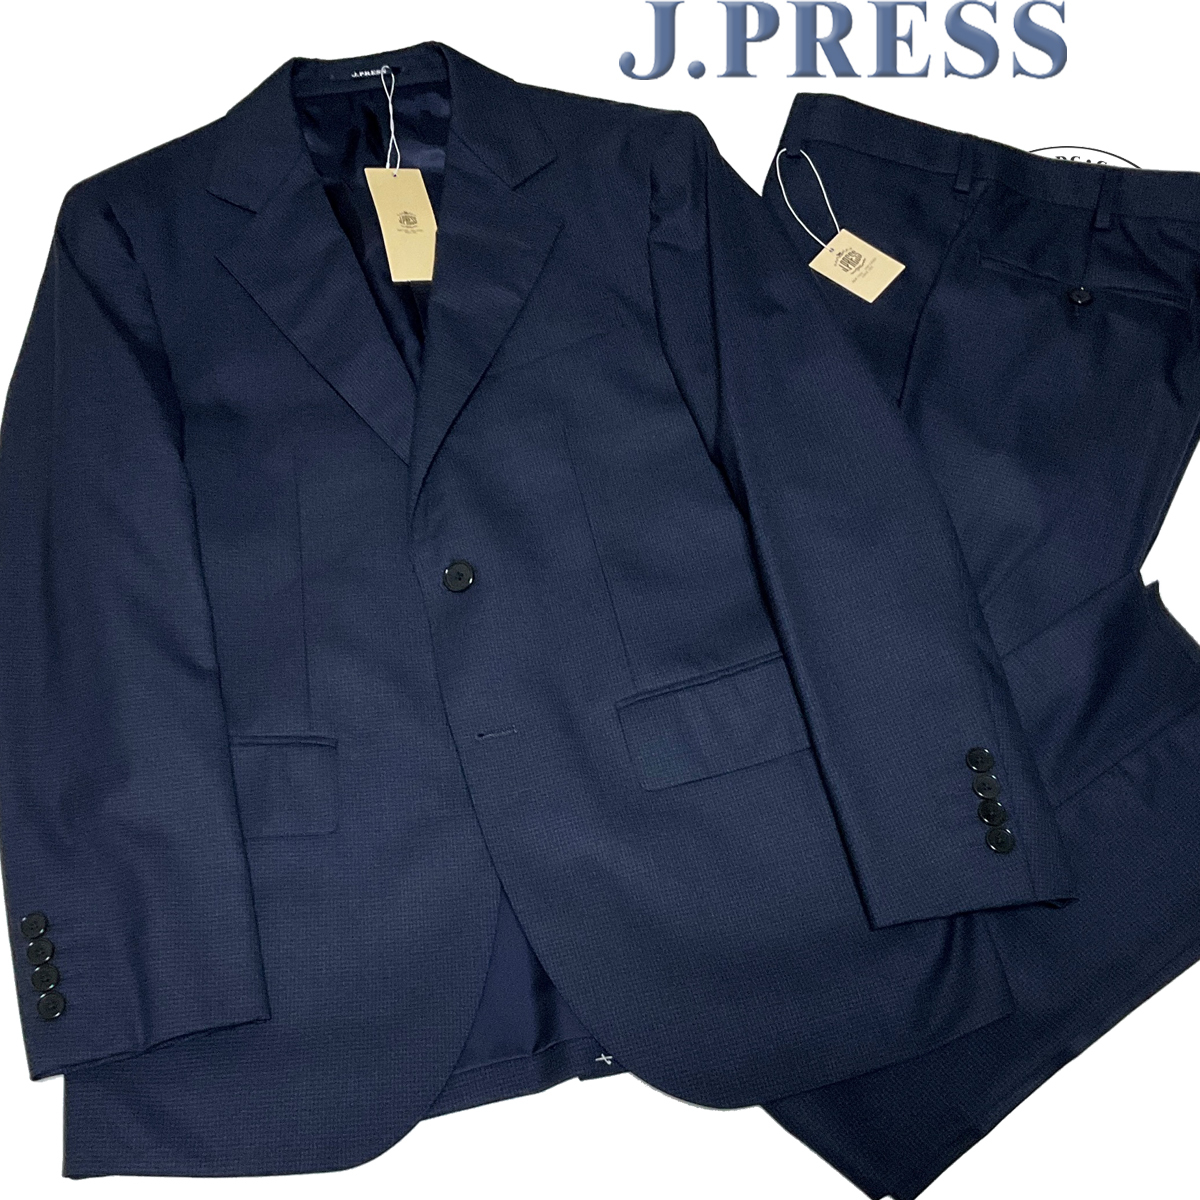 JP457A4 новый товар! осень-зима J.PRESS J Press стандартный Essential Clothing микро - undo палец на ноге s костюм Onward . гора есть перевод 